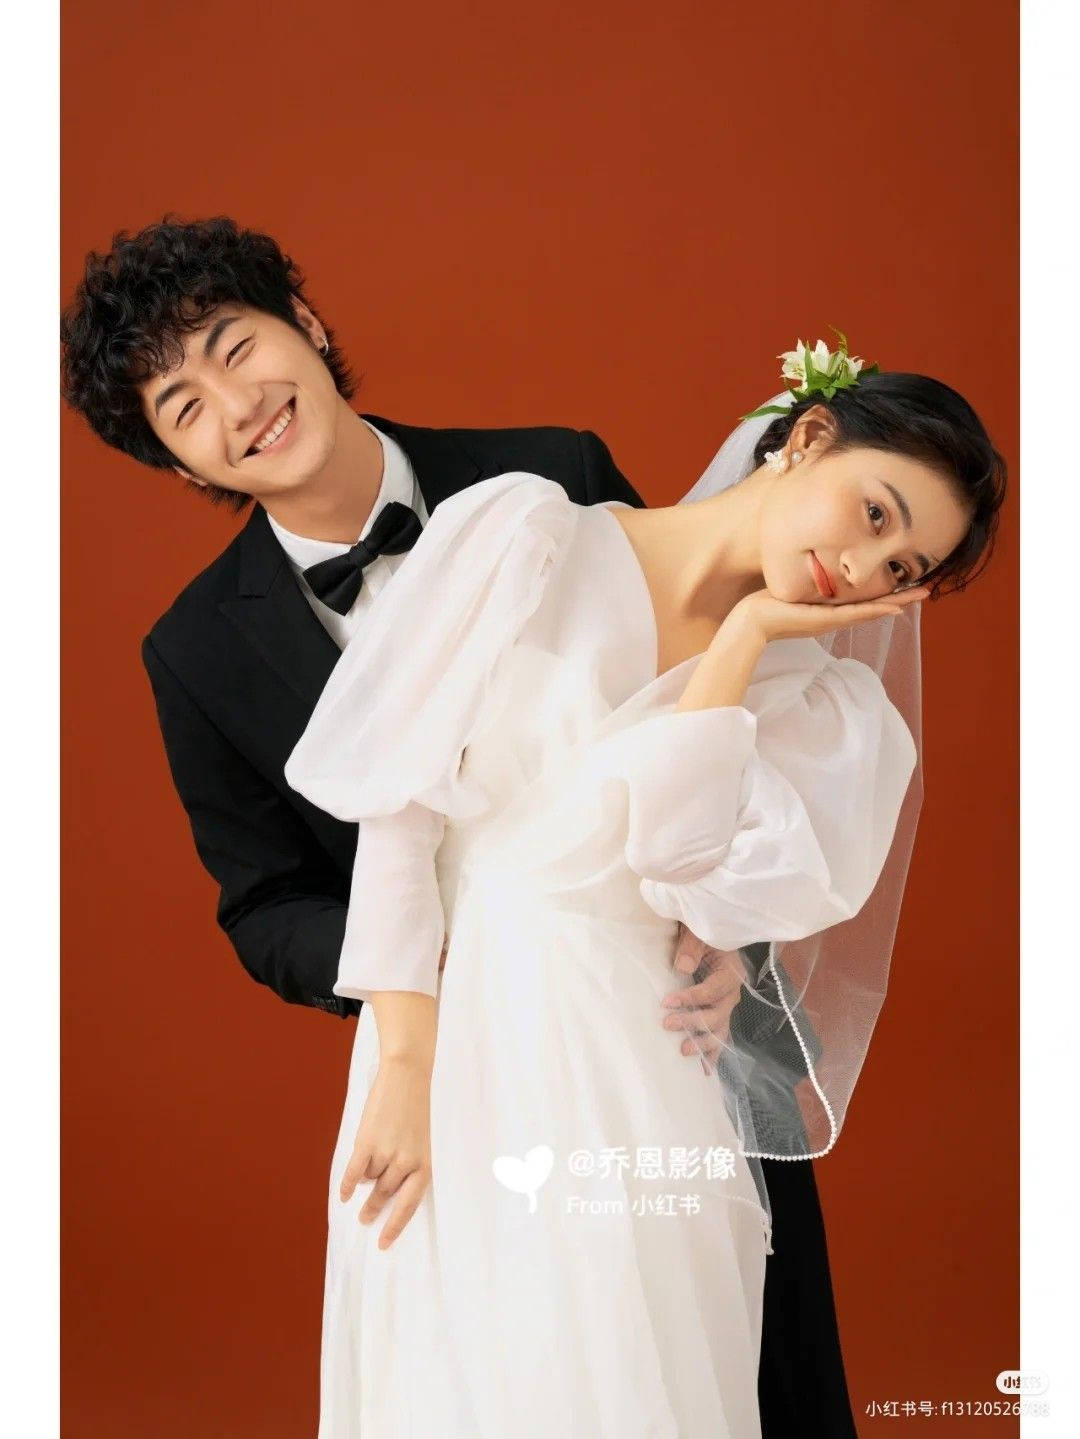 Koreanischespaar Hochzeitsfotografie Wallpaper